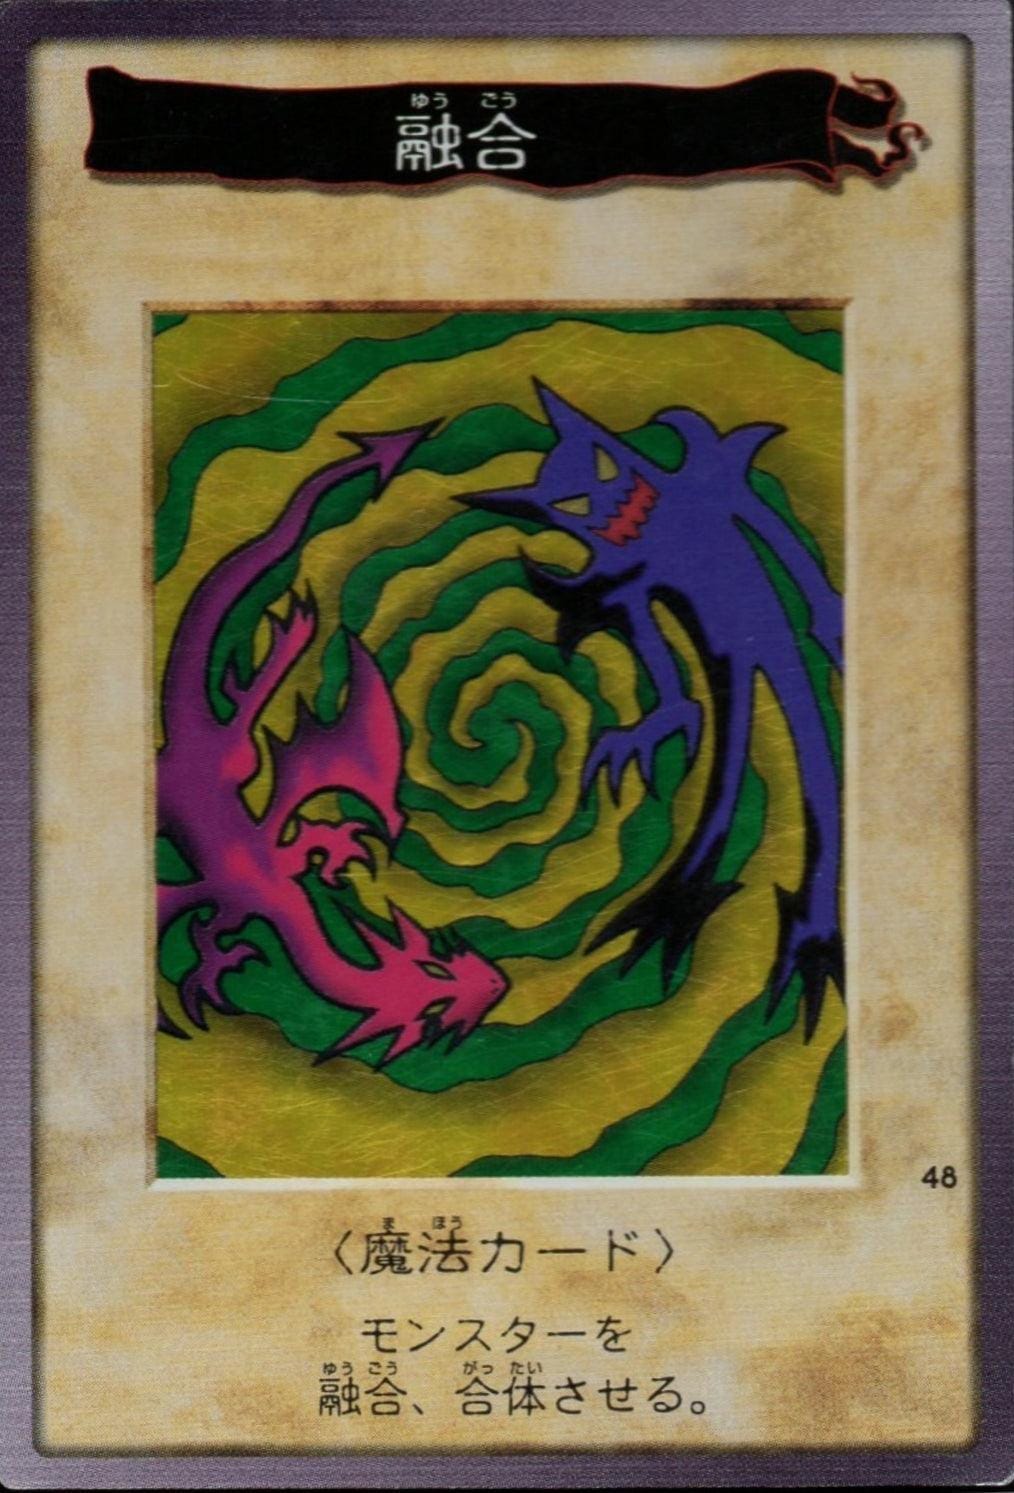 Yu Gi Oh! | Bandai Card No.48 | Polymerization ChitoroShop